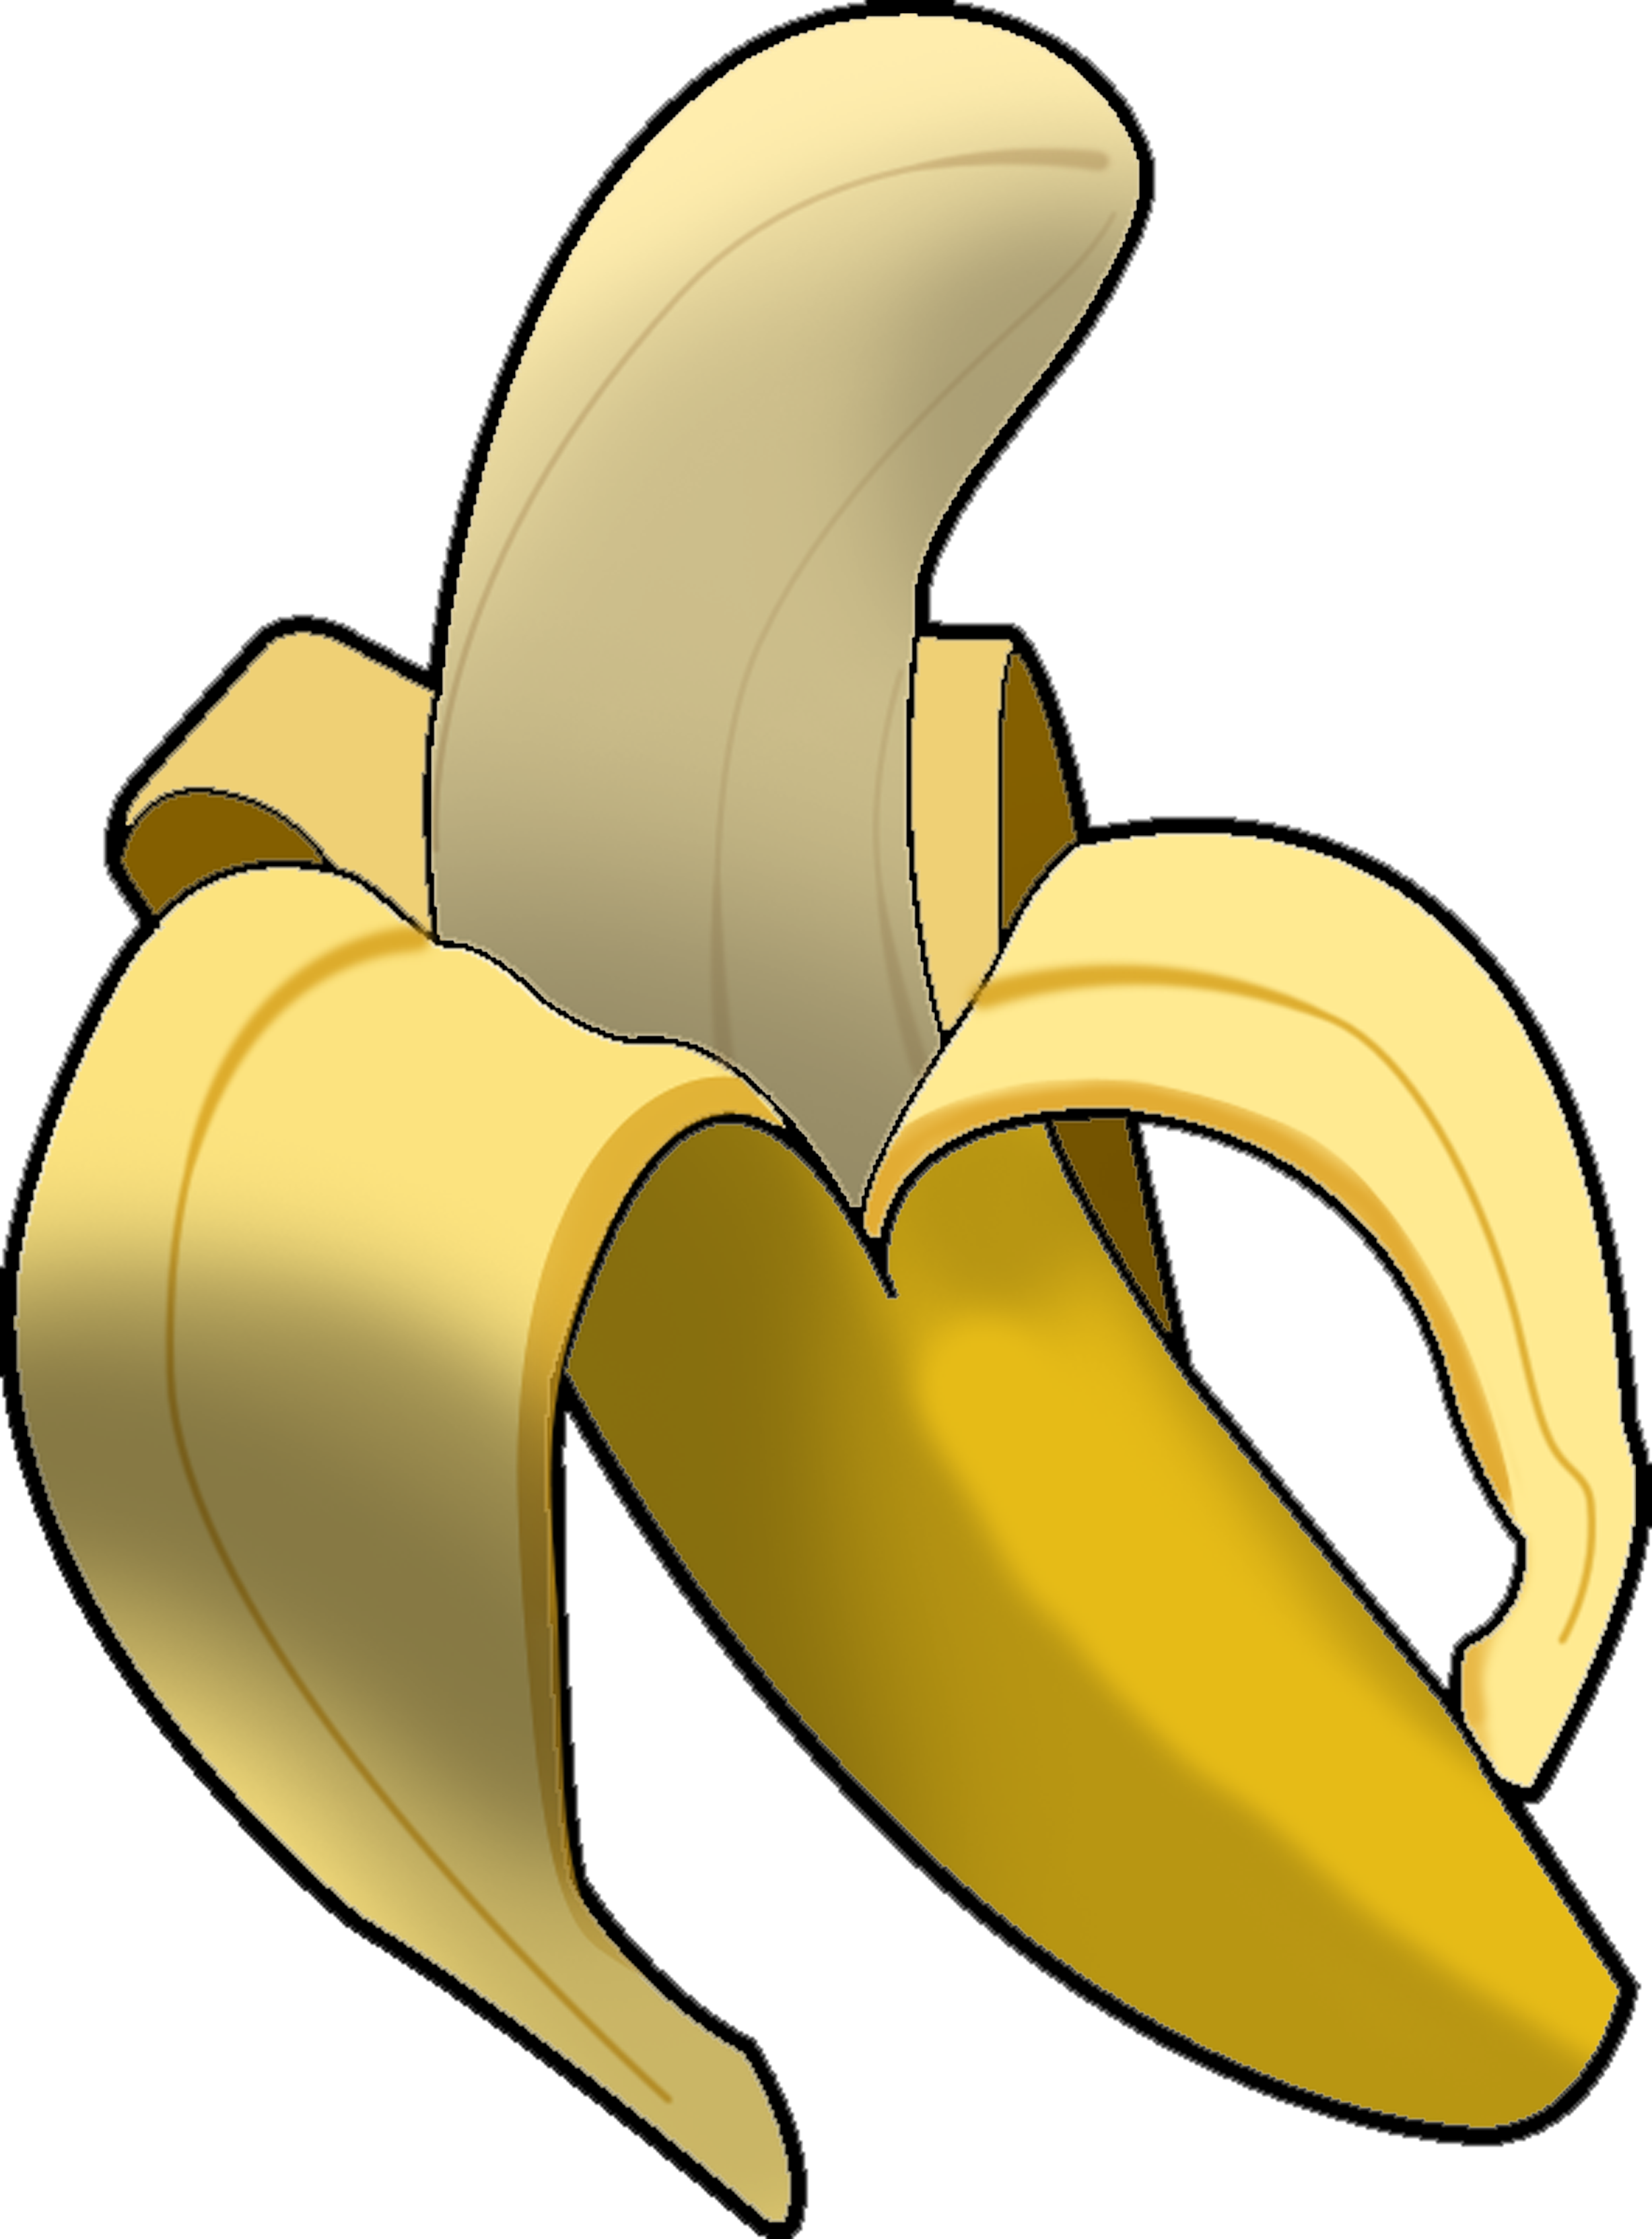 Plantain Banana Free Images At Clkercom Vector Clip Art Online